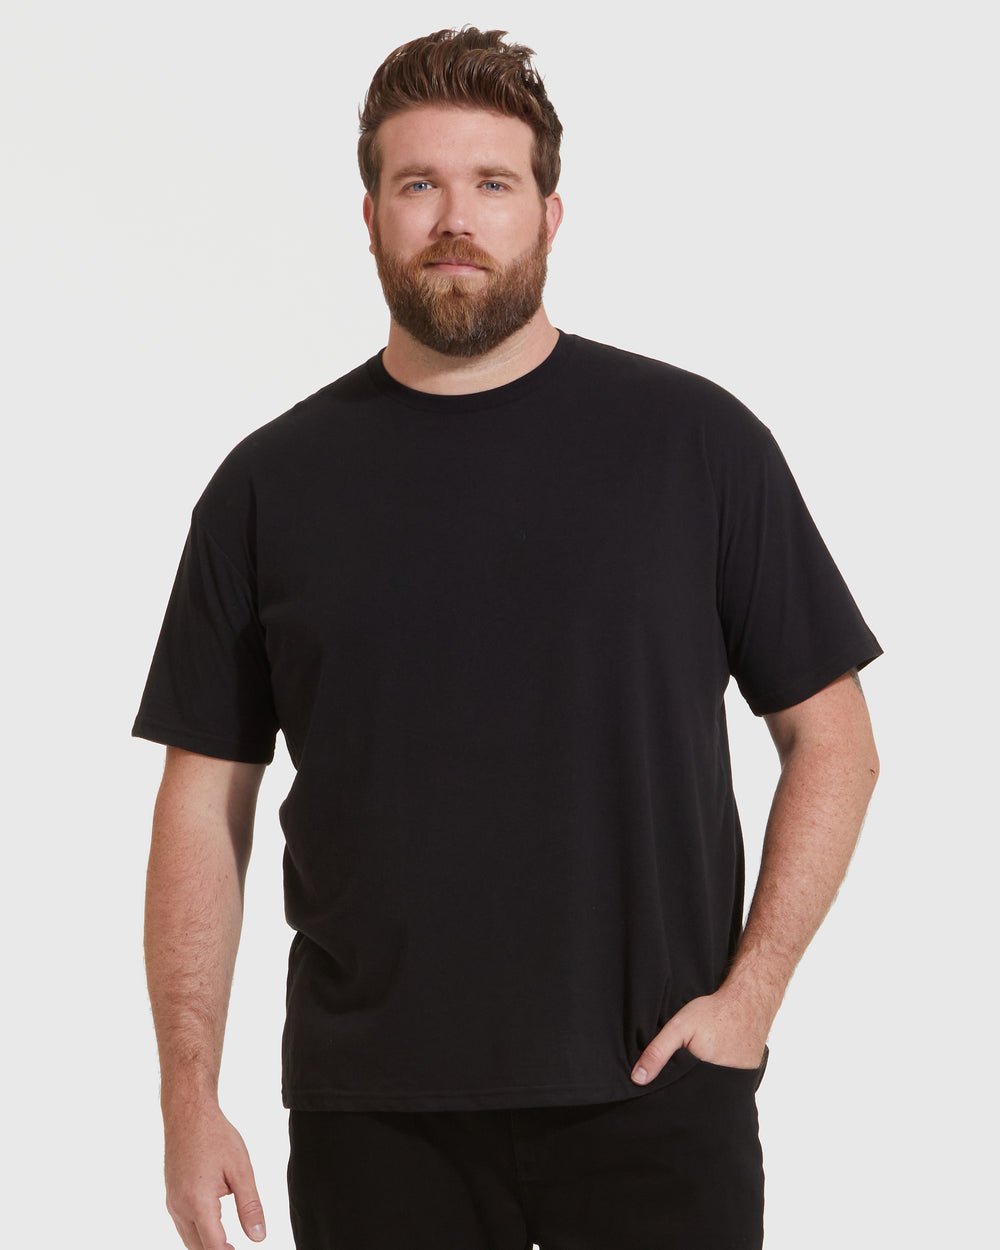 Men's Black Crew Neck T-Shirt - True Classic